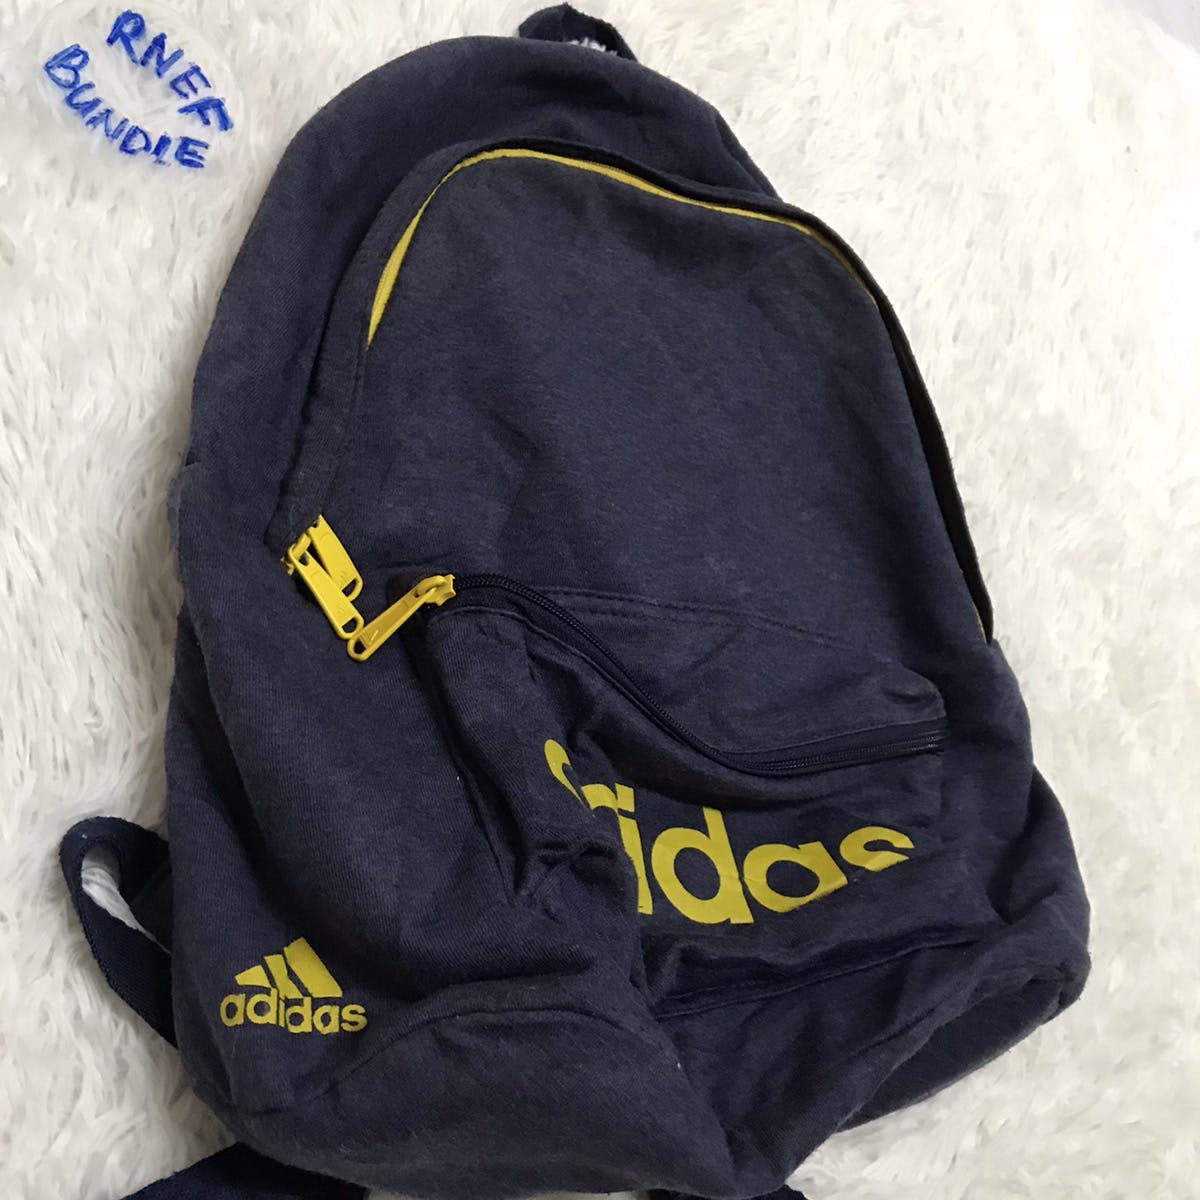 Adidas Backpack - 6